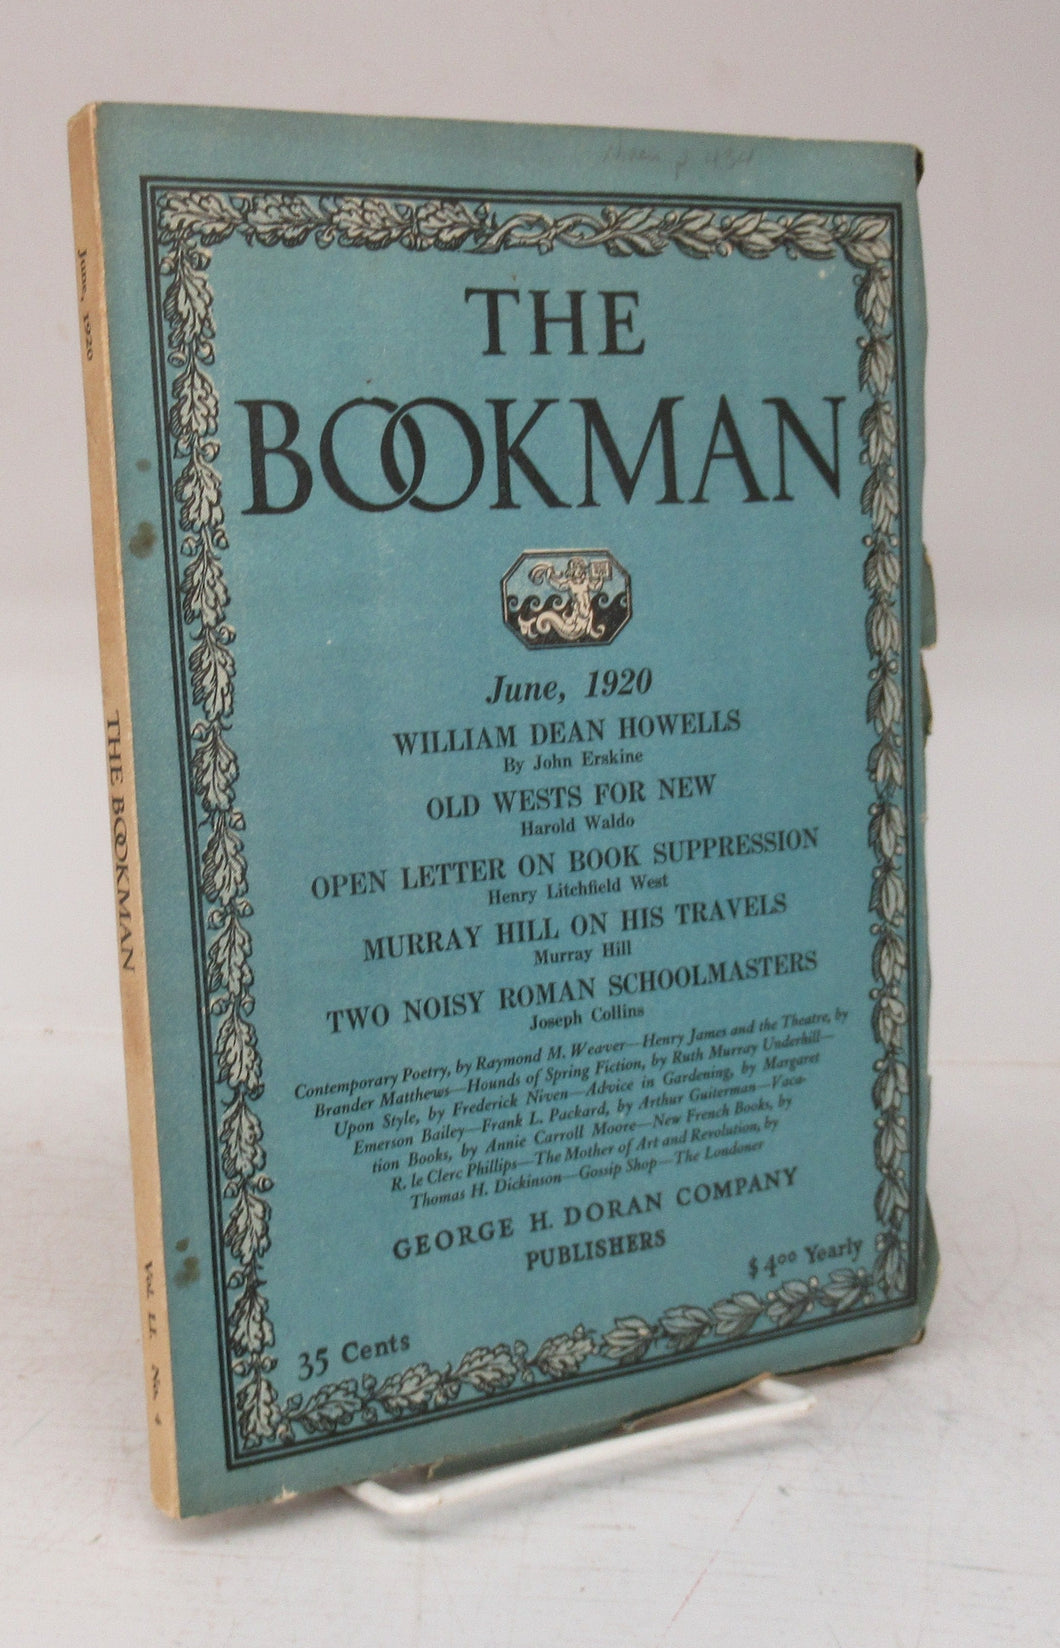 The Bookman, June 1920